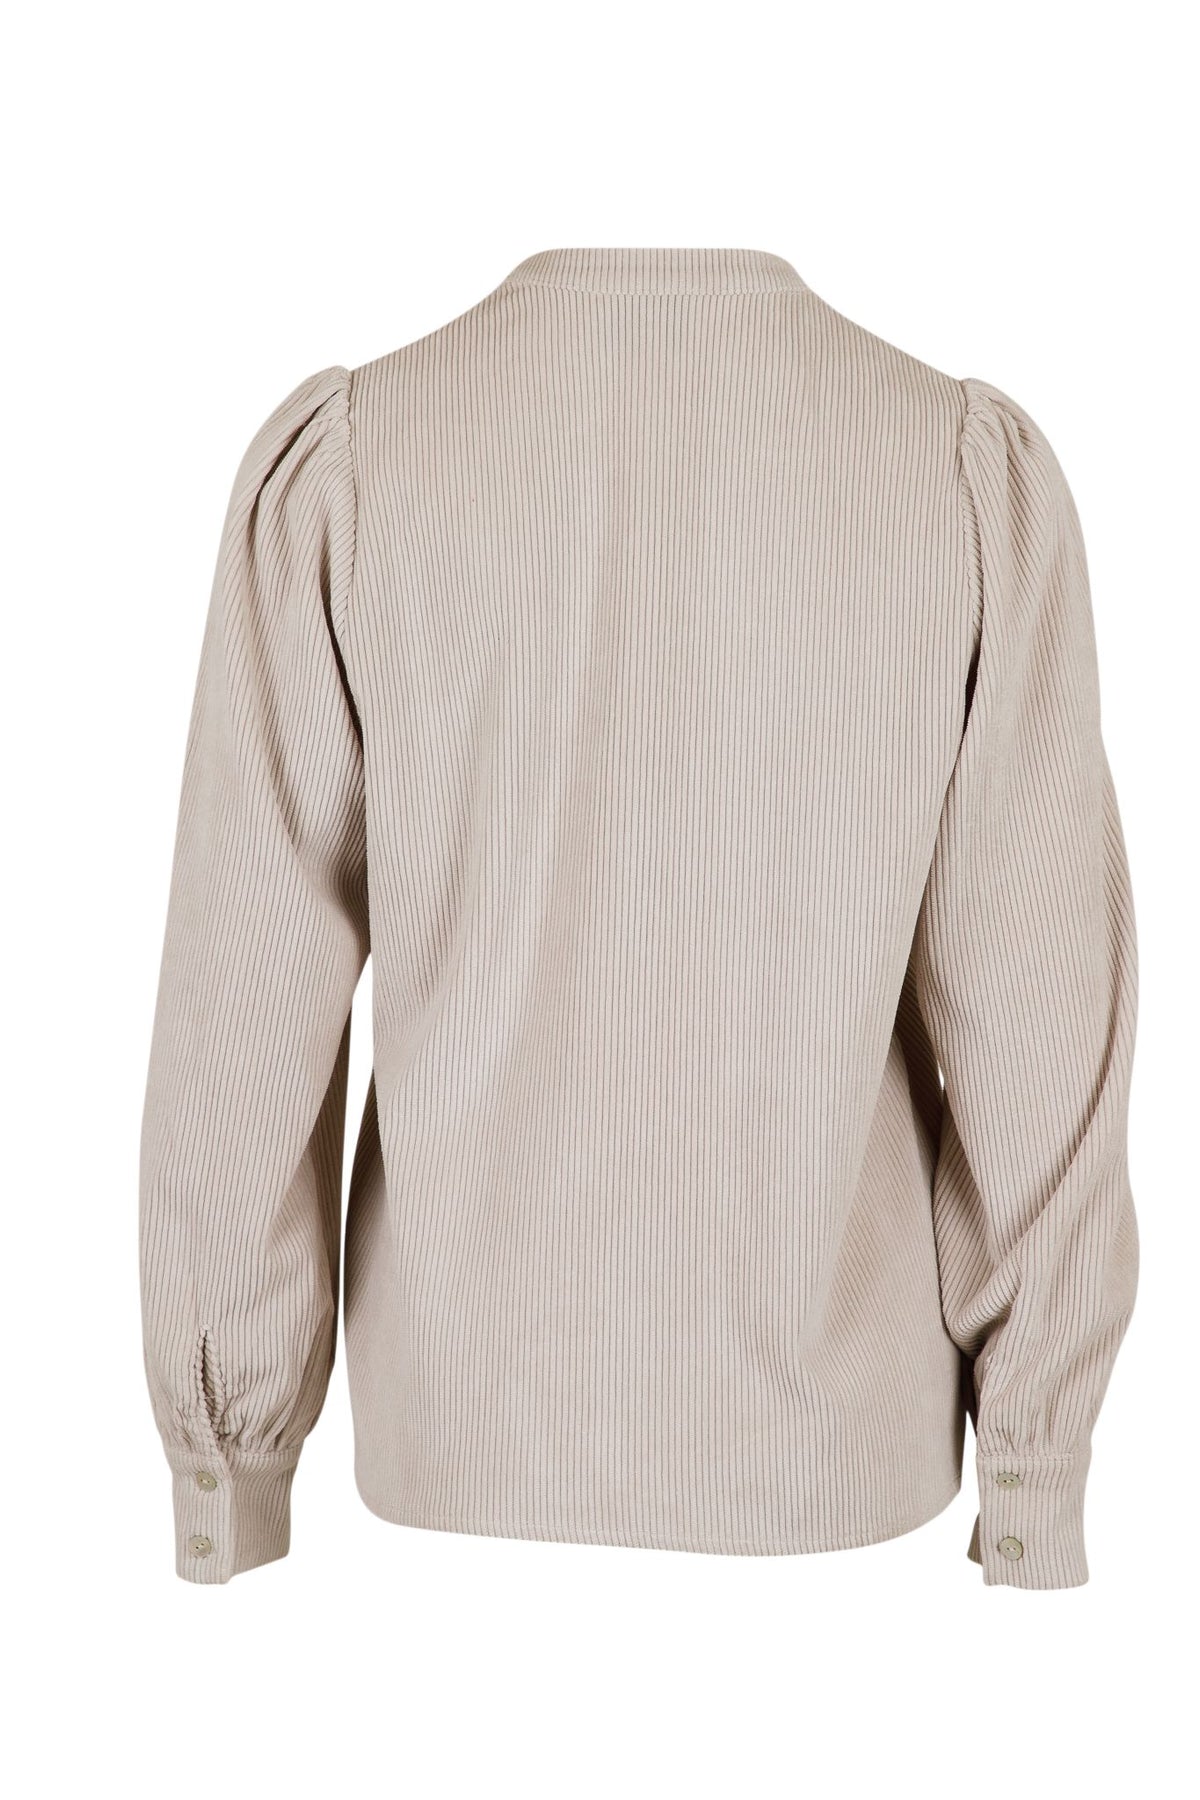 Aja Cord Shirt - Sand - Neo Noir - Bluser & Skjorter - VILLOID.no